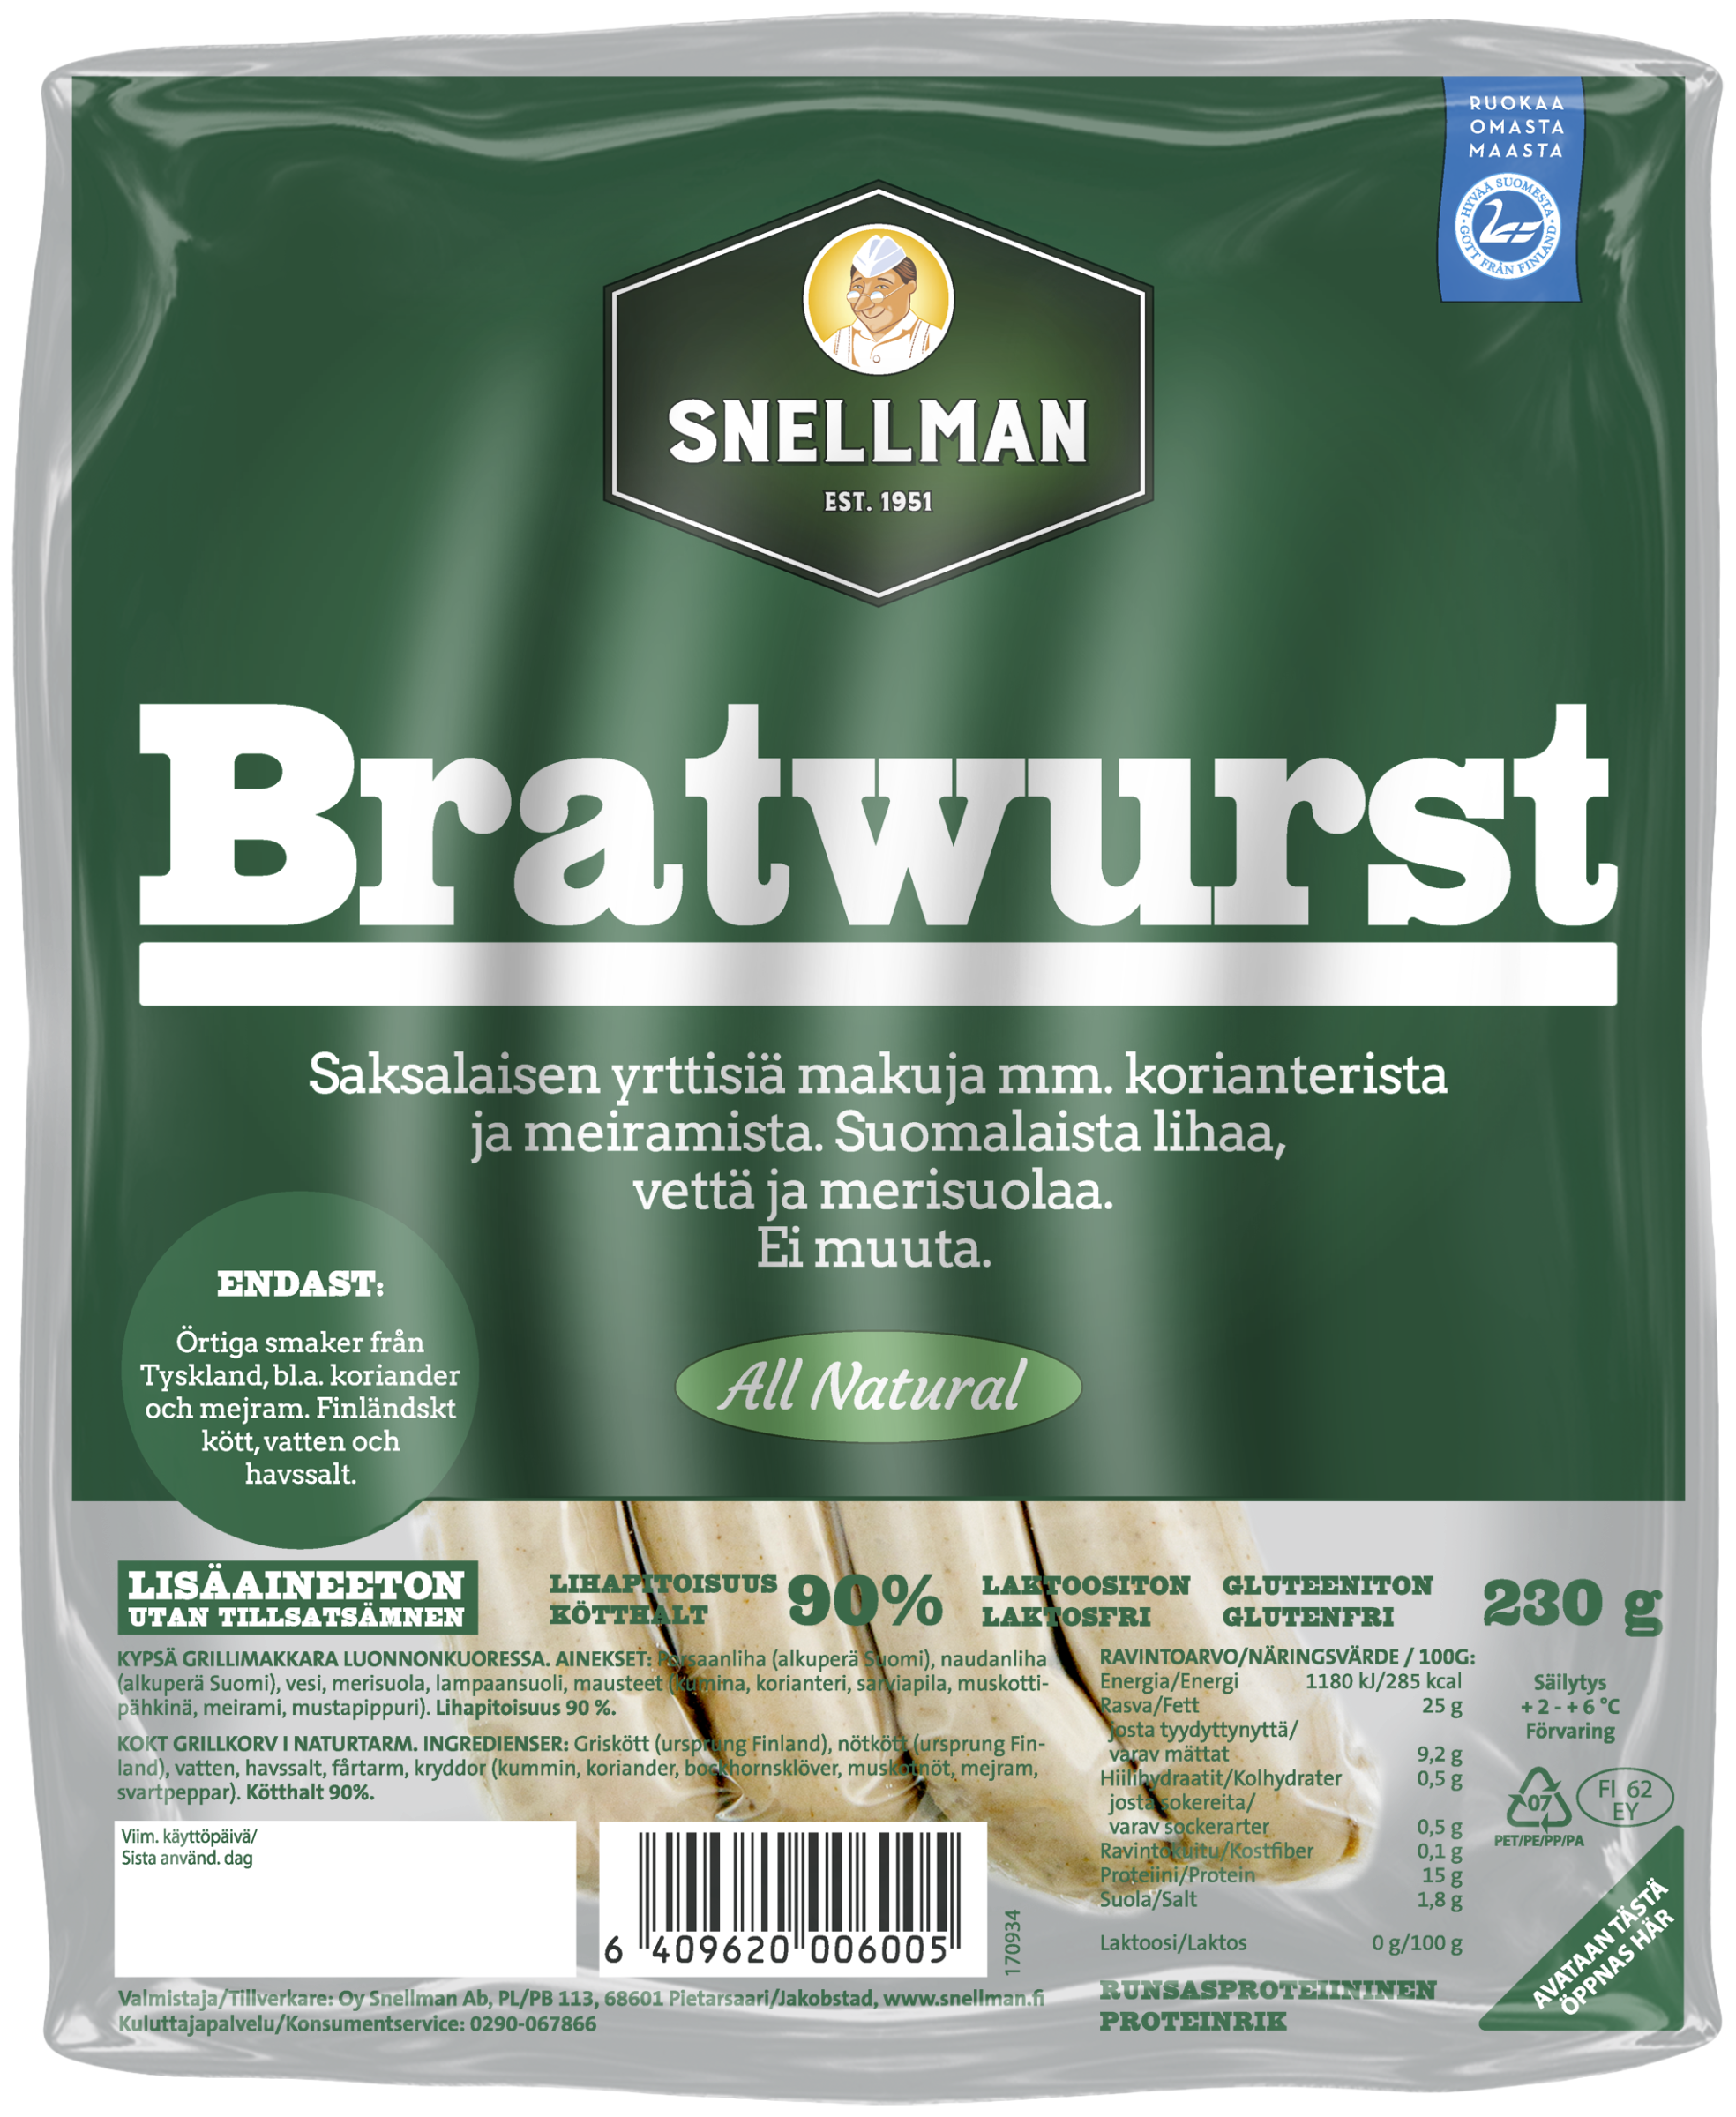 All Natural Bratwurst 3